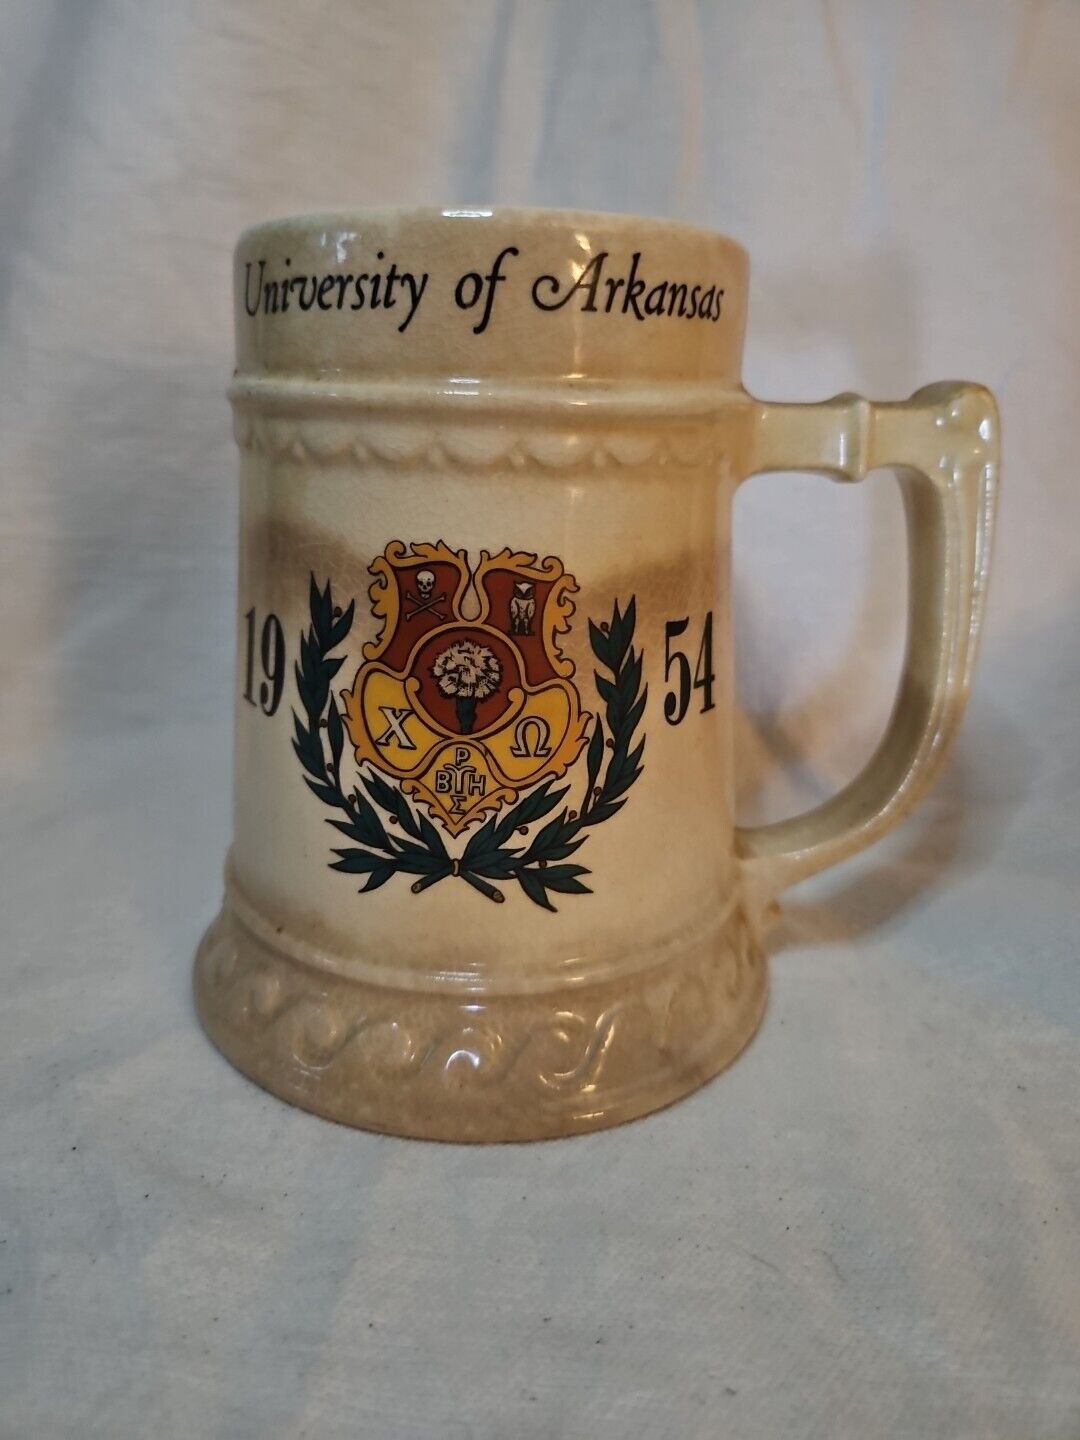 chi omega mug from Univ of Arkansas 1954